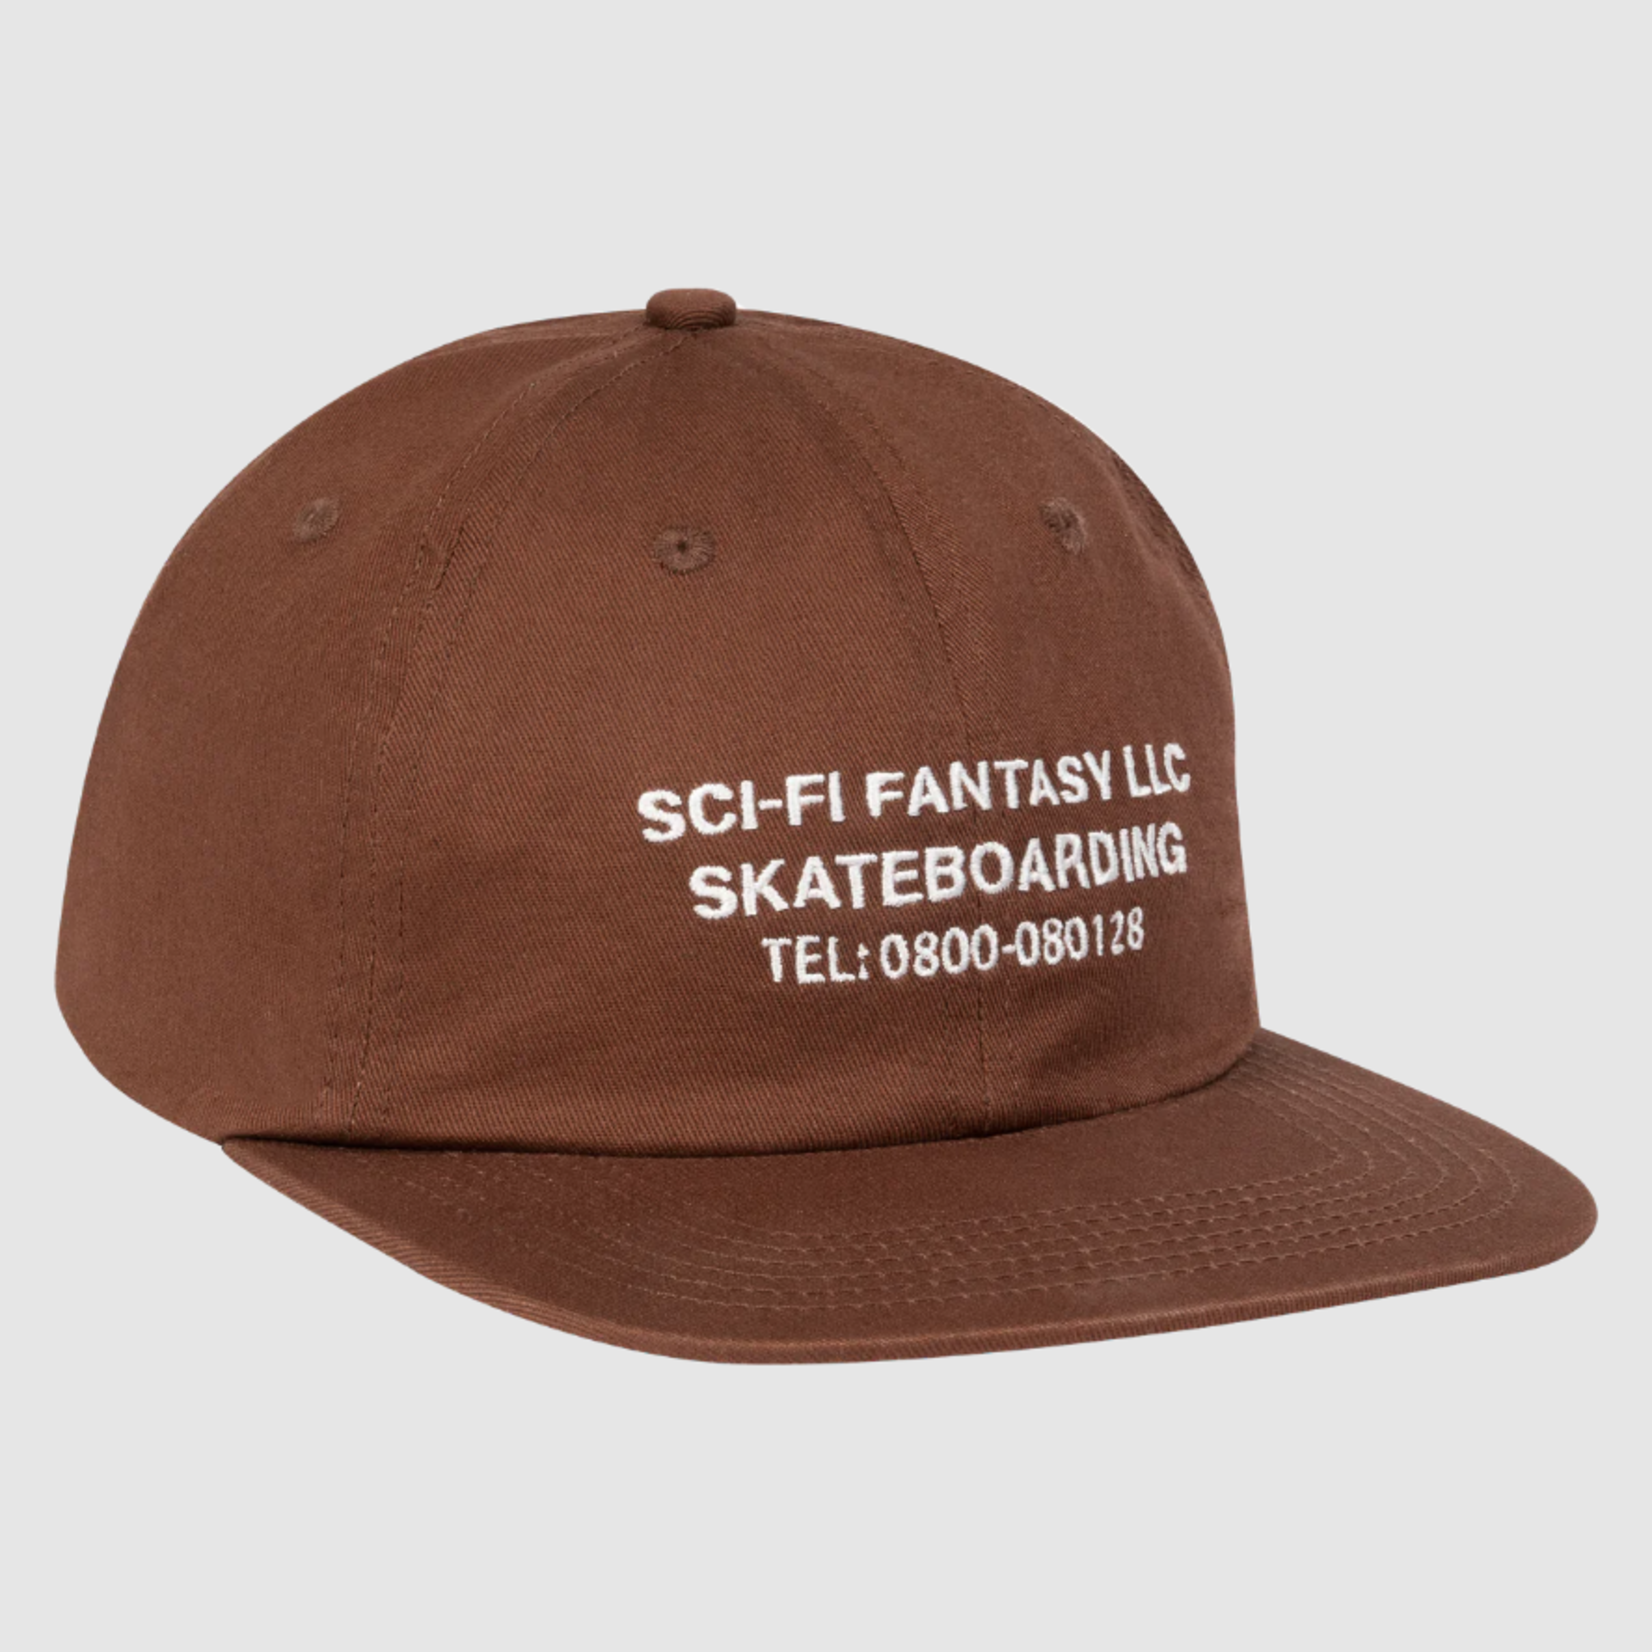 Sci-Fi Fantasy Sci-Fi Fantasy LLC Hat - Brown